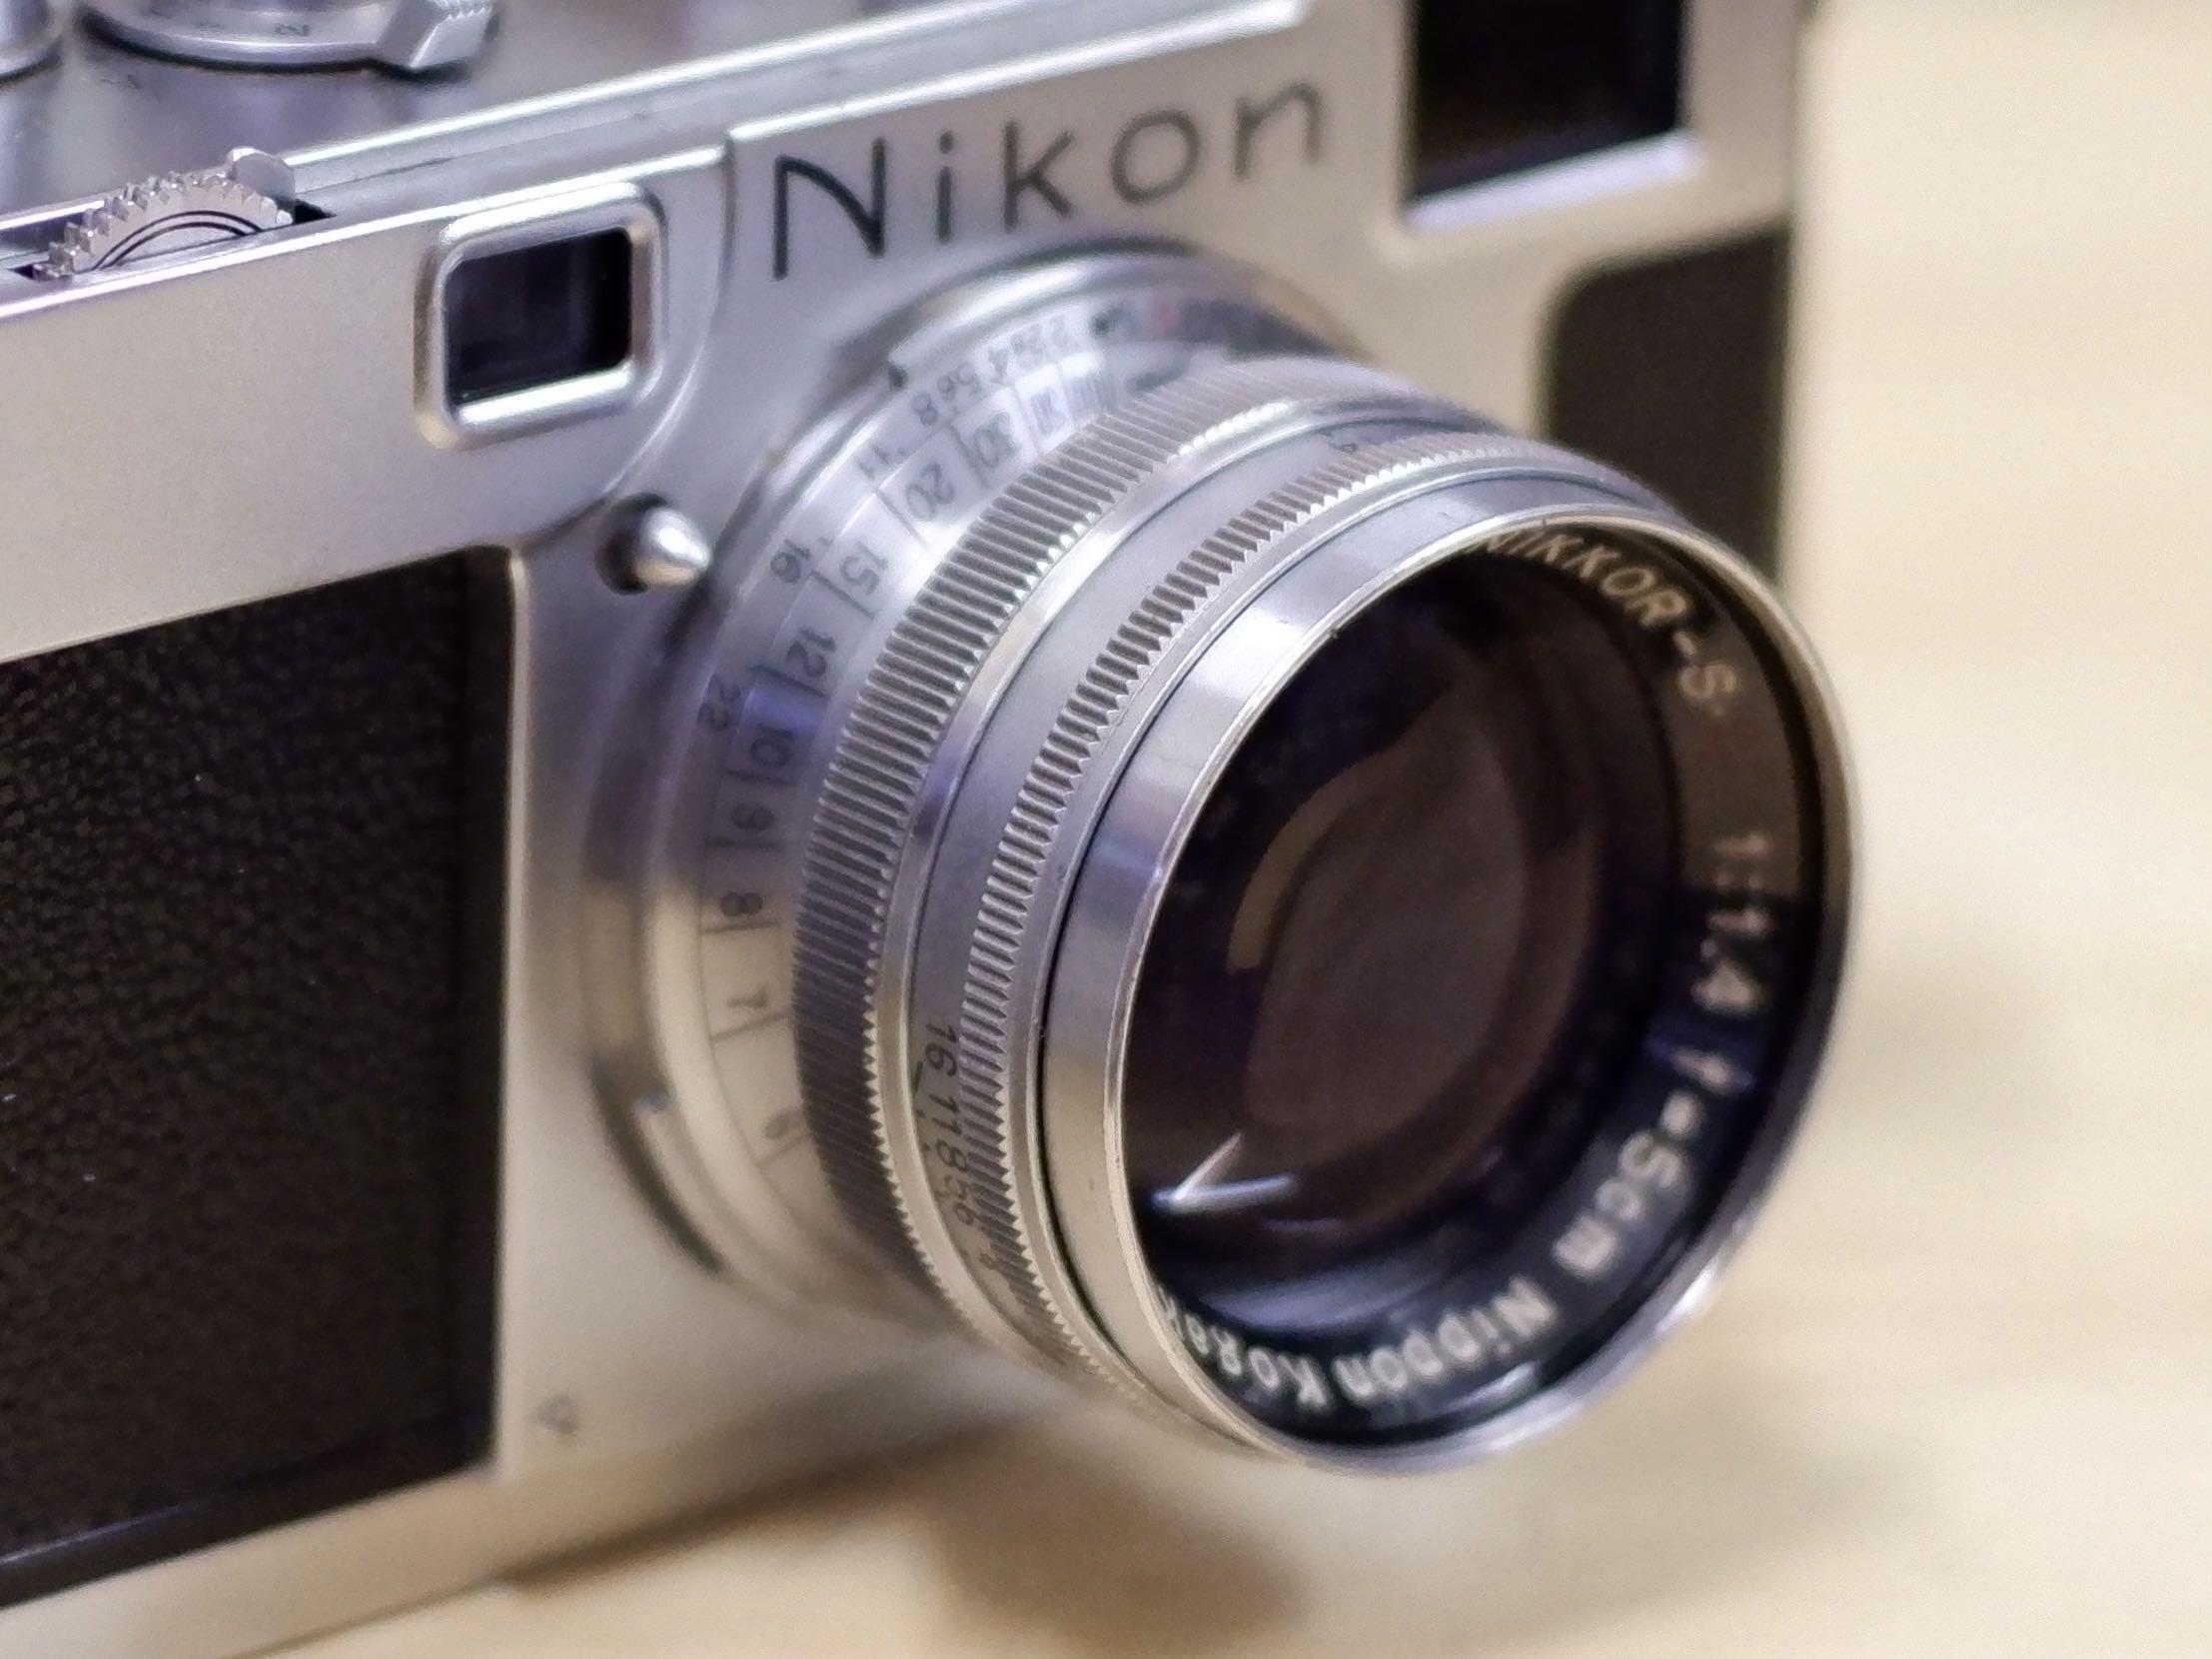 Nikon S2 + Nikkor HC 50mm f2 s mount lens (另有50mm f1.4), 攝影